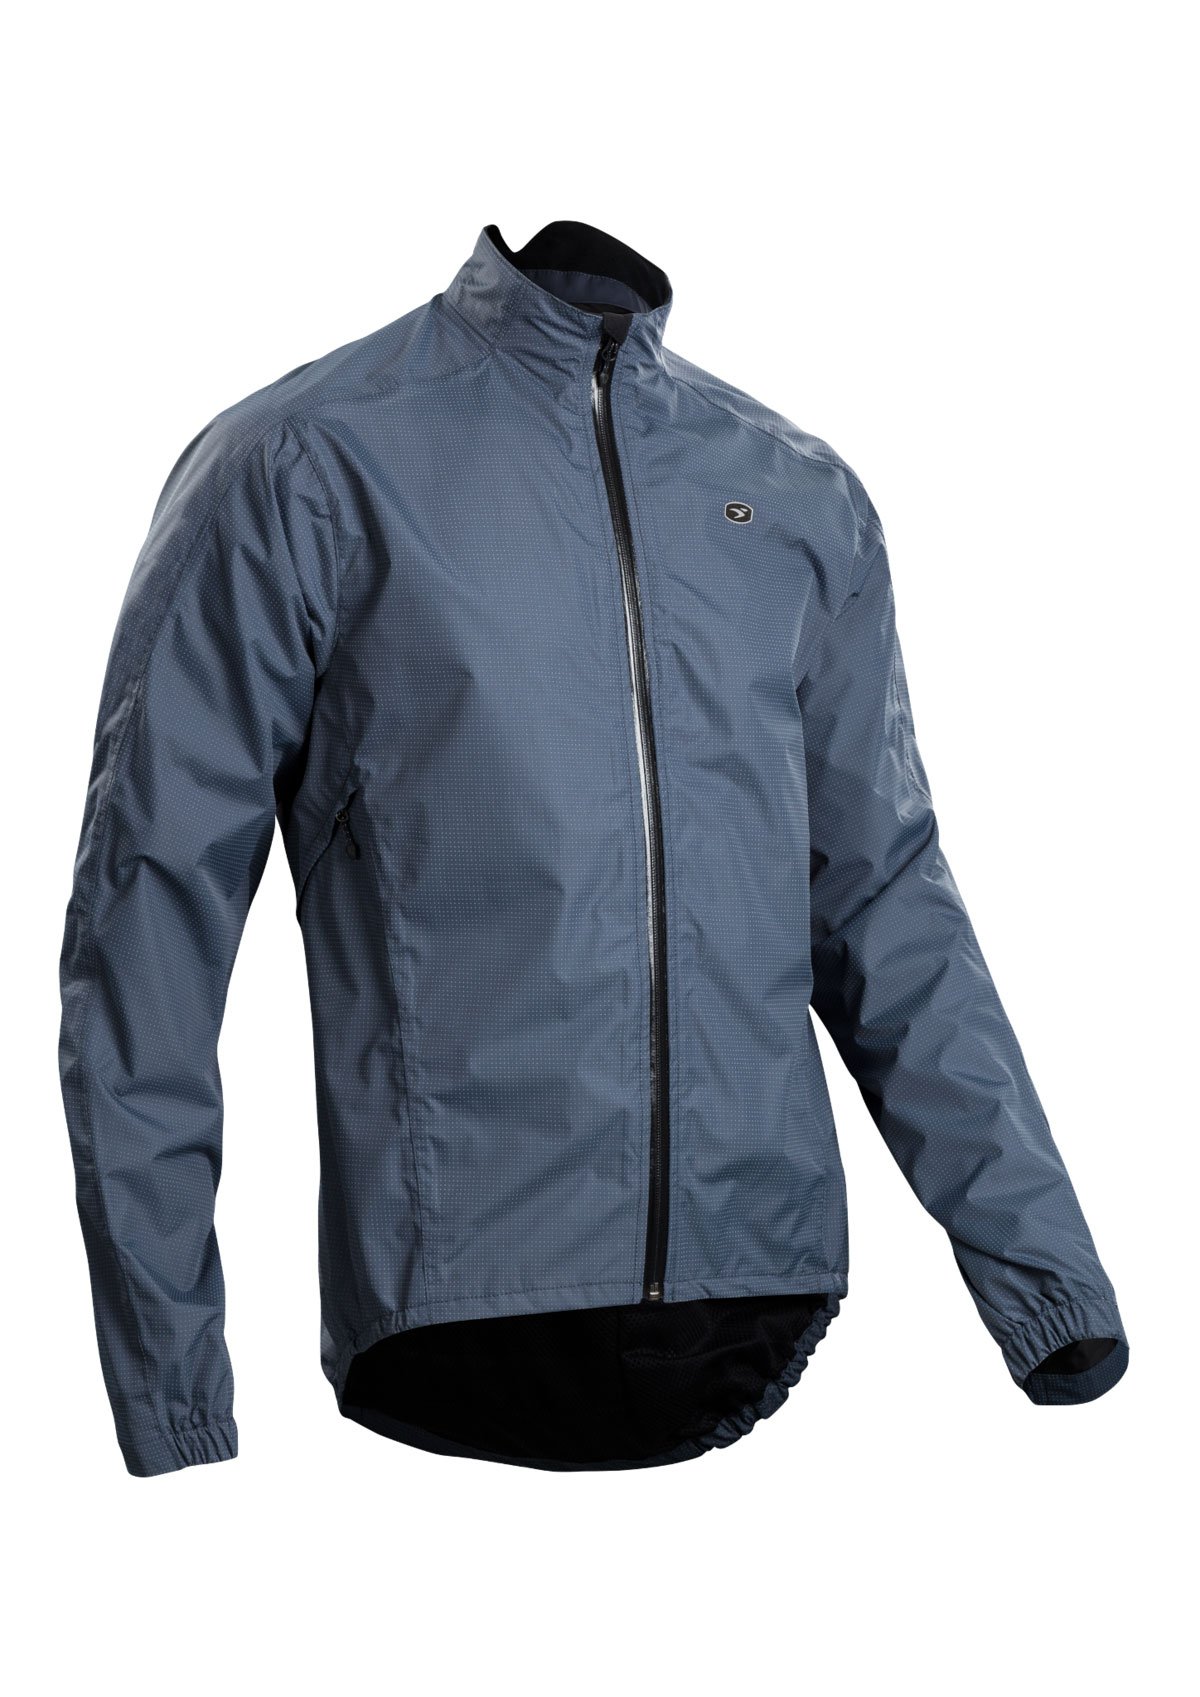 Куртка Sugoi ZAP BIKE, светоотражающая ткань, мужская, GRY (серая), XL